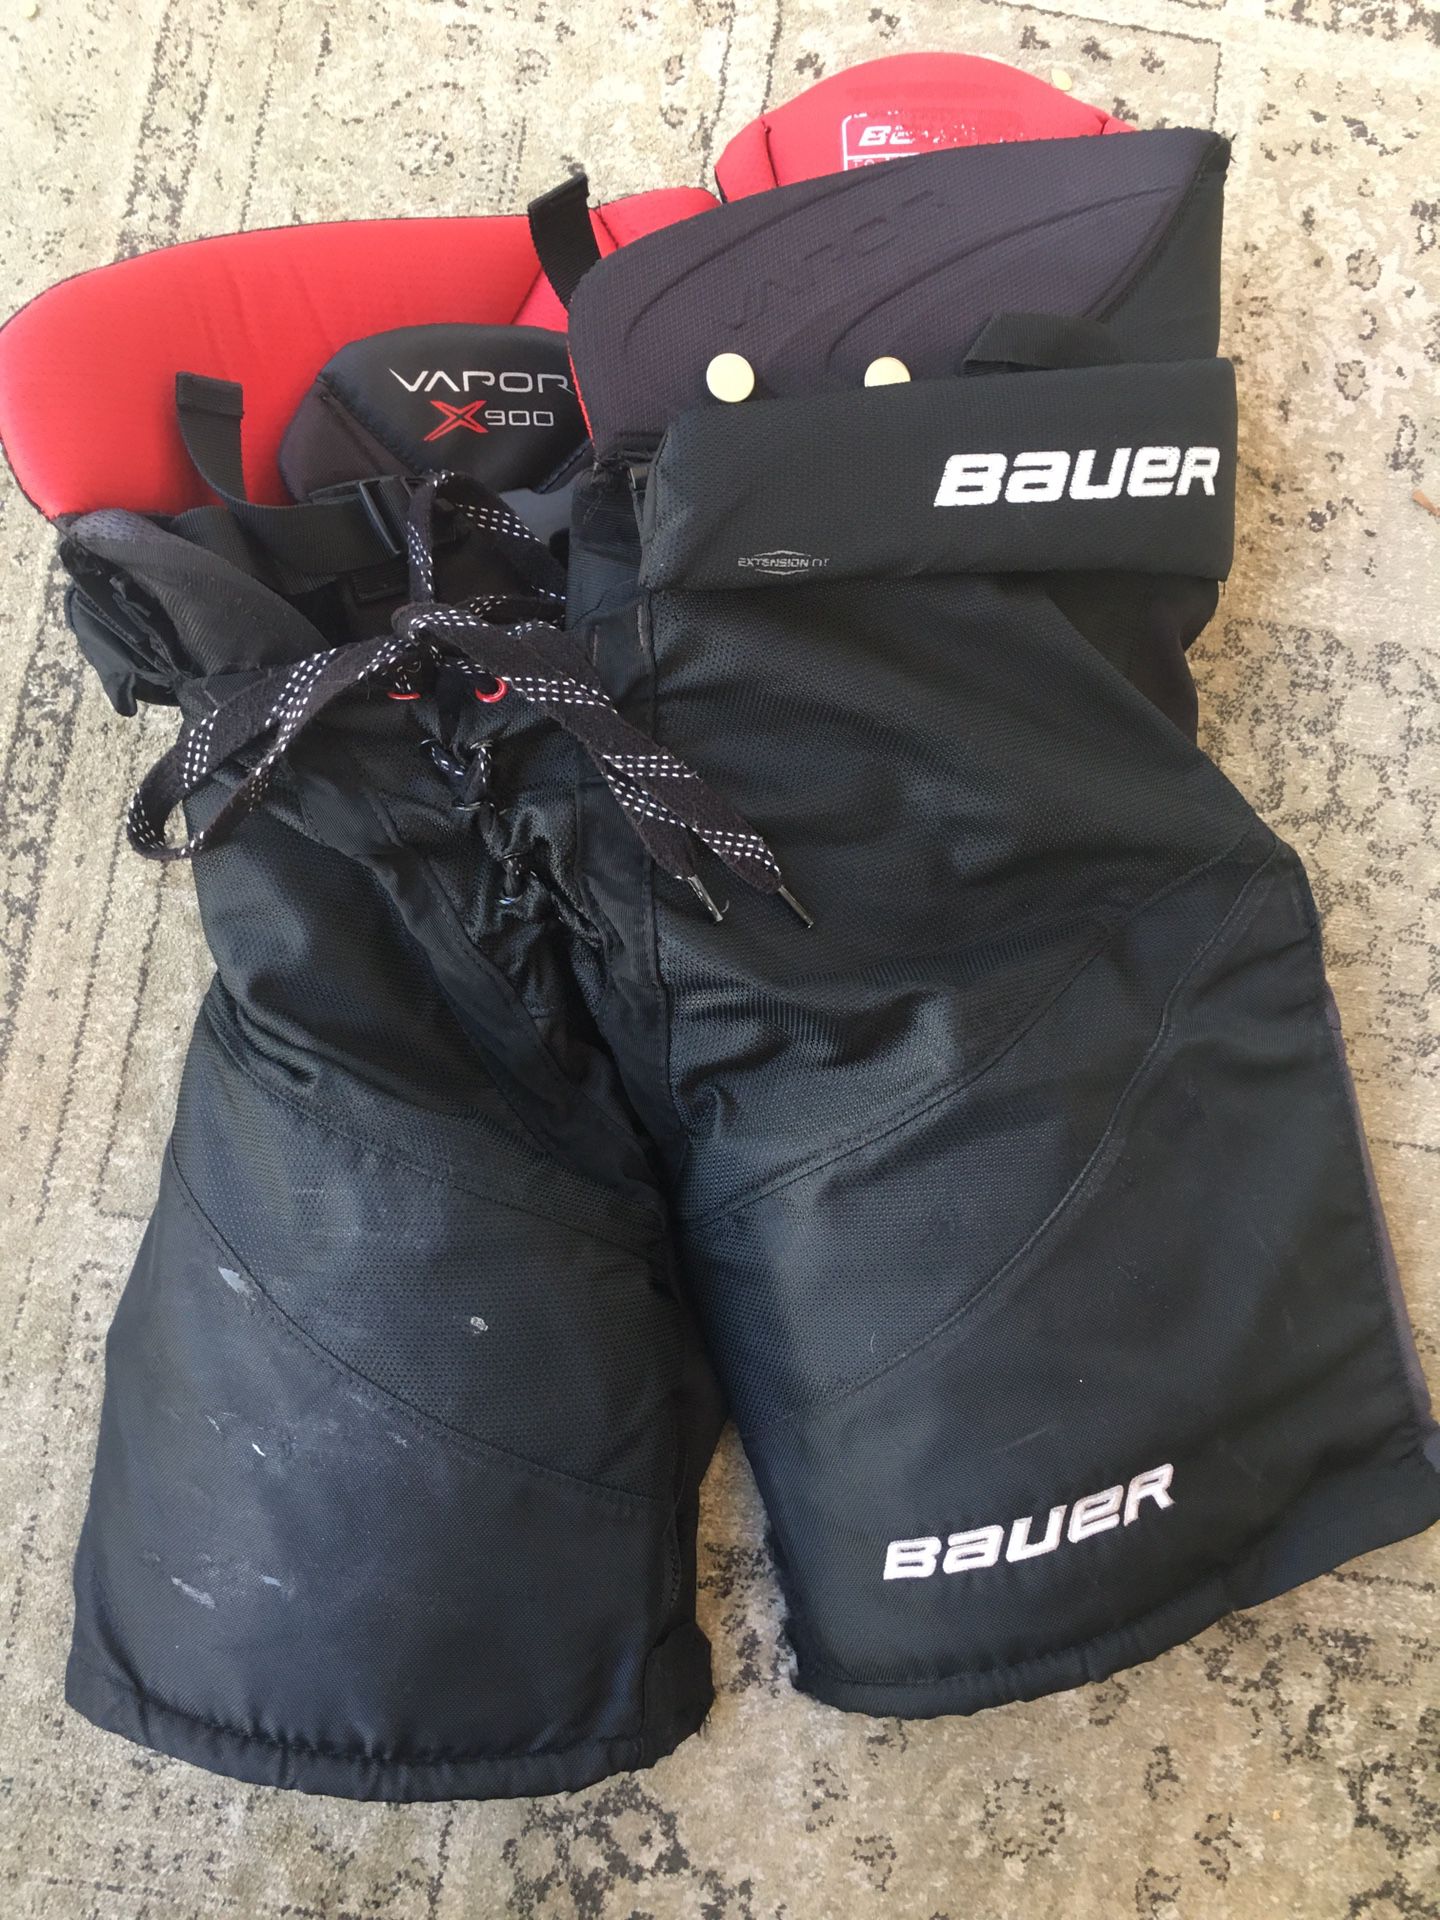 Bauer Vapor Ice Hockey Pants Size JR. Large 37.5